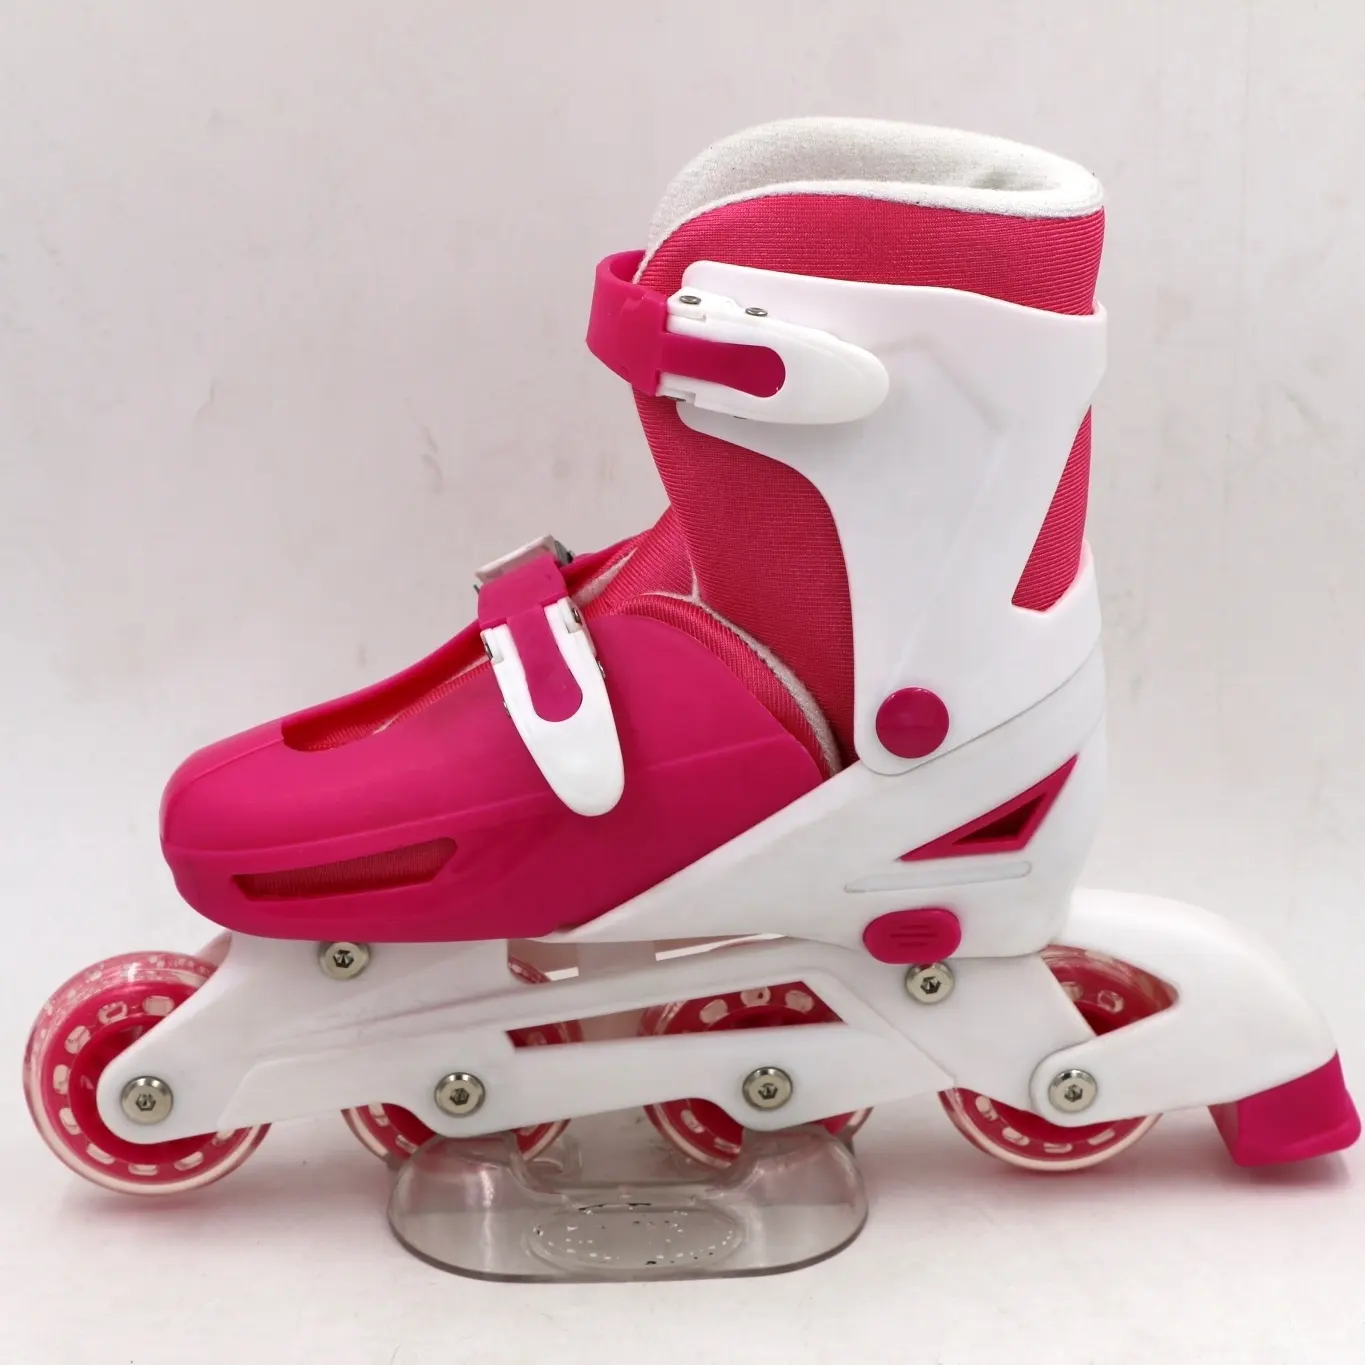 Aggressive Inline Skates Shoes Hot Selling New For Kids Roller Skate Material Adjustable 4 Wheels